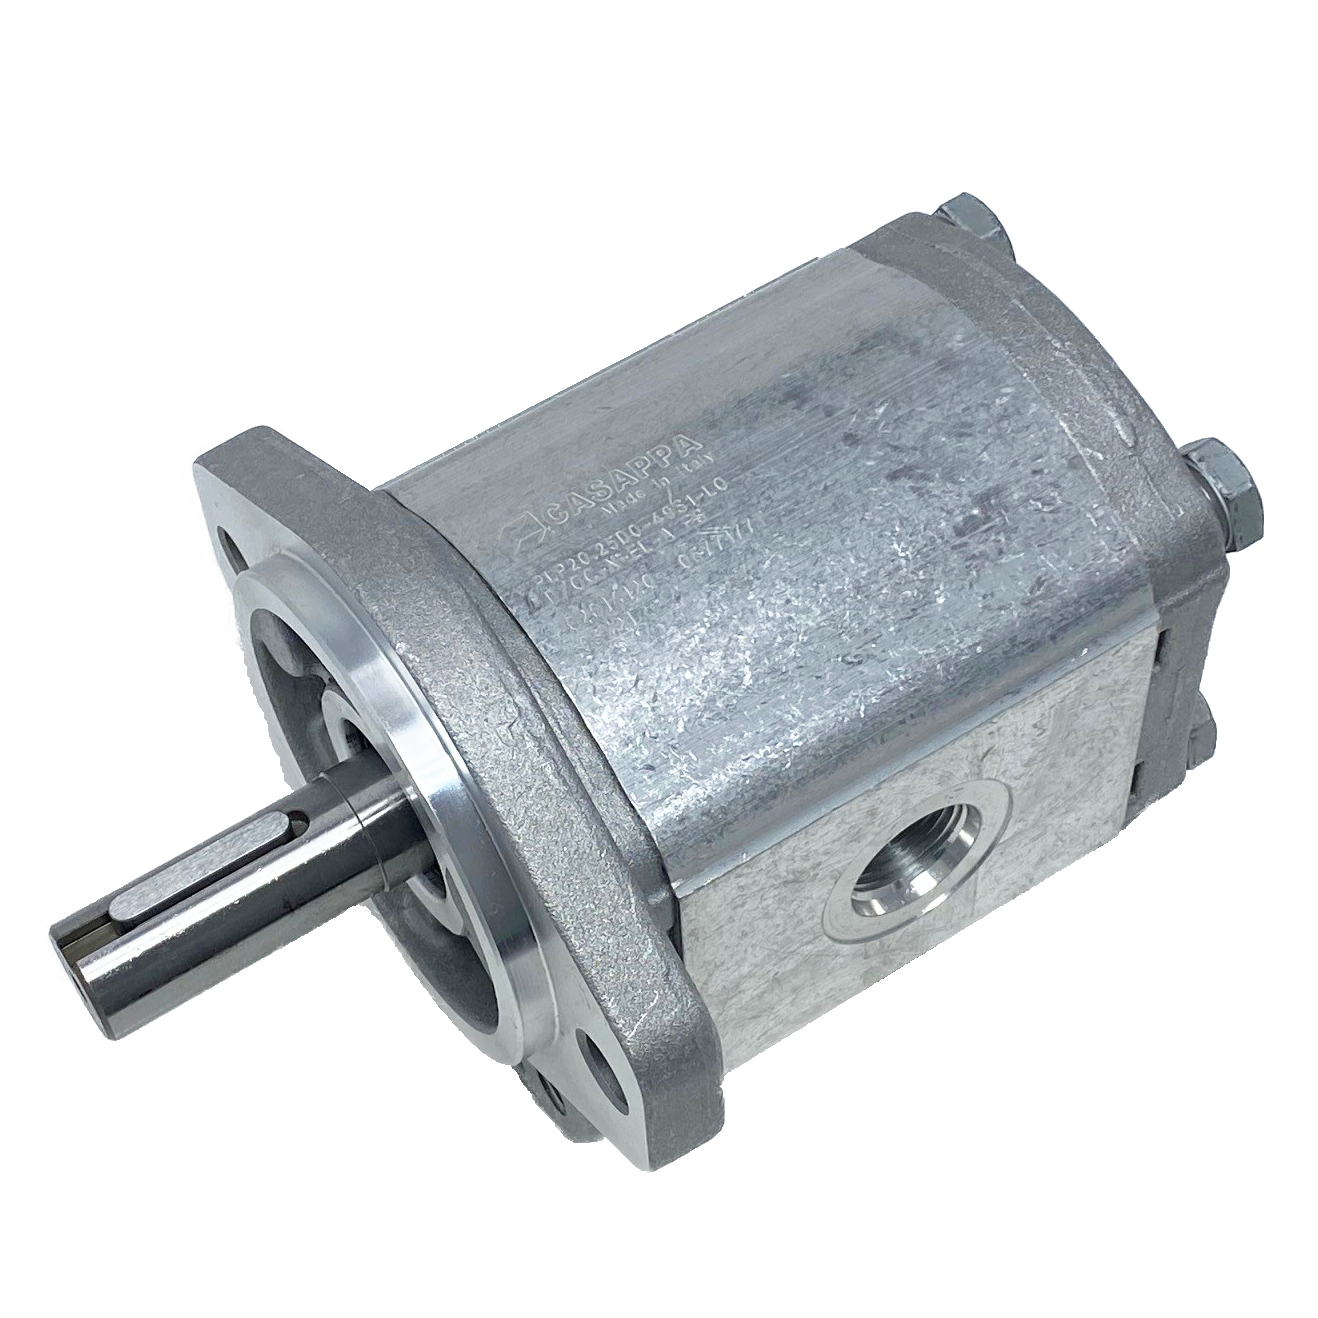 PHM20.31,5R0-49S9-LOC/OG-N-EL : Casappa Polaris Gear Motor, 33.03cc, 2900psi, 2500RPM, Reversible, External Drain, 3/4" Bore x 3/16" Key Shaft, SAE A 2-Bolt Flange, 0.625 (5/8") #10 SAE In, 1.25" #20 SAE Out, Cast Iron Body, Aluminum Flange